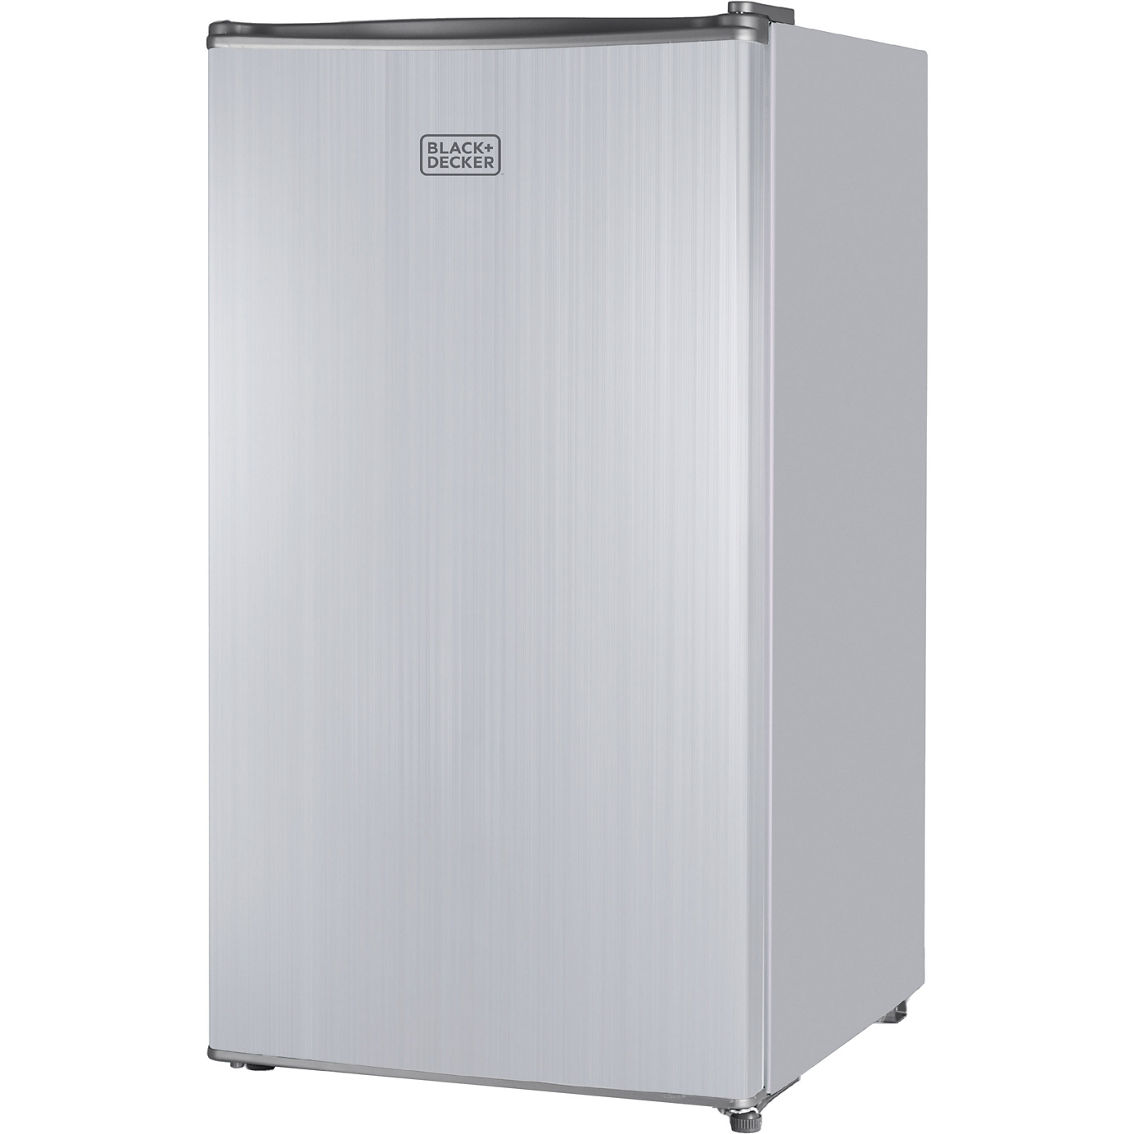 3.2 cu feet Small Refrigerator